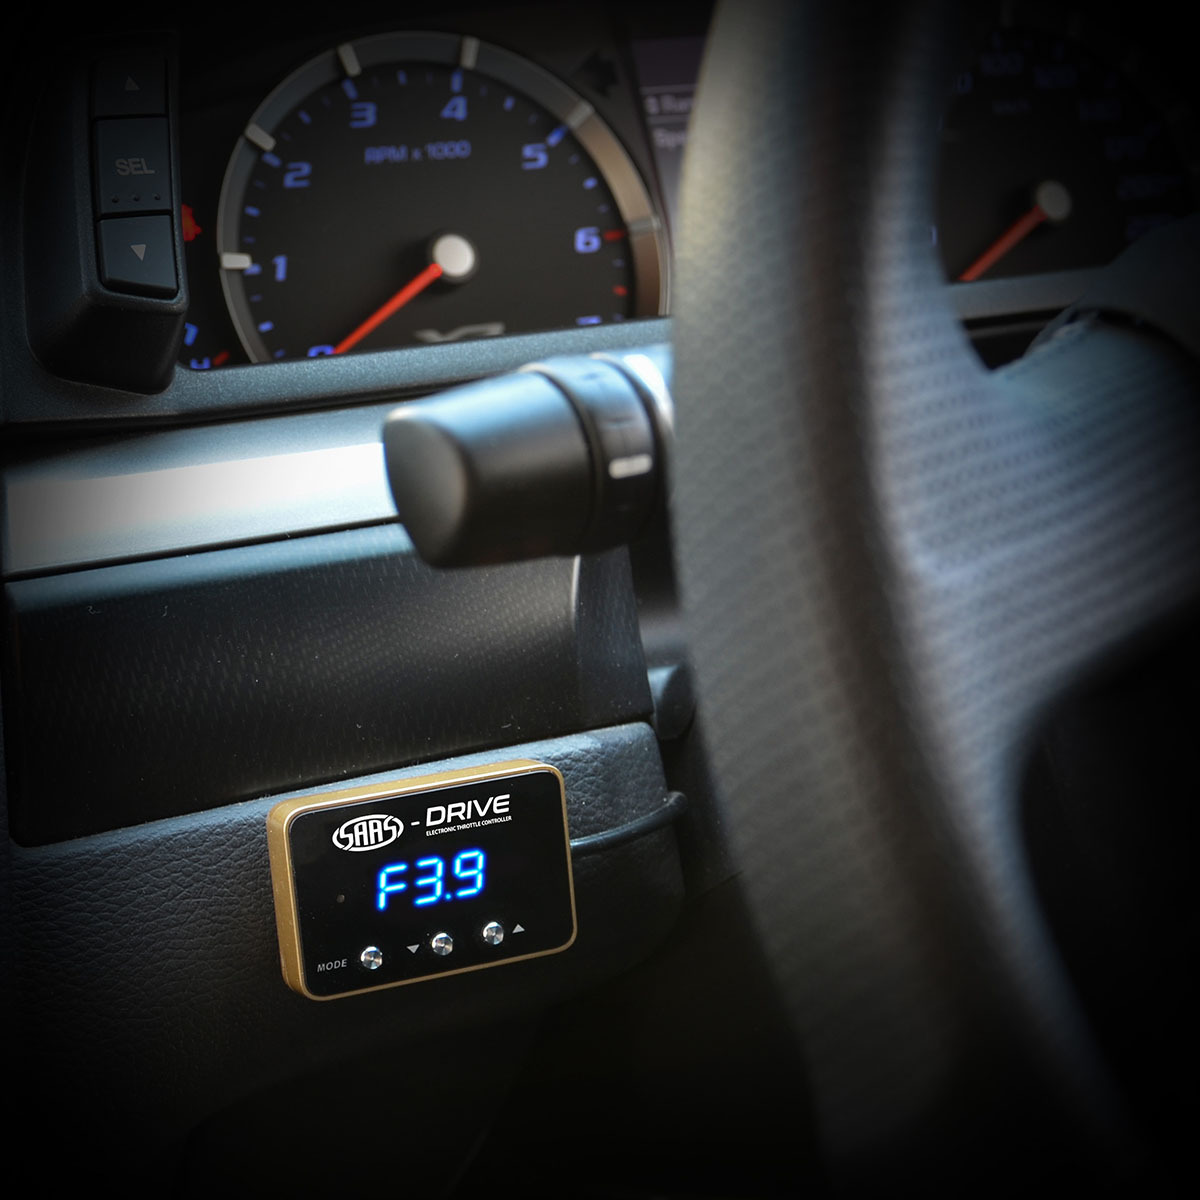 Throttle Controller Land Rover Evoque 2014 - 2015 SAAS Drive